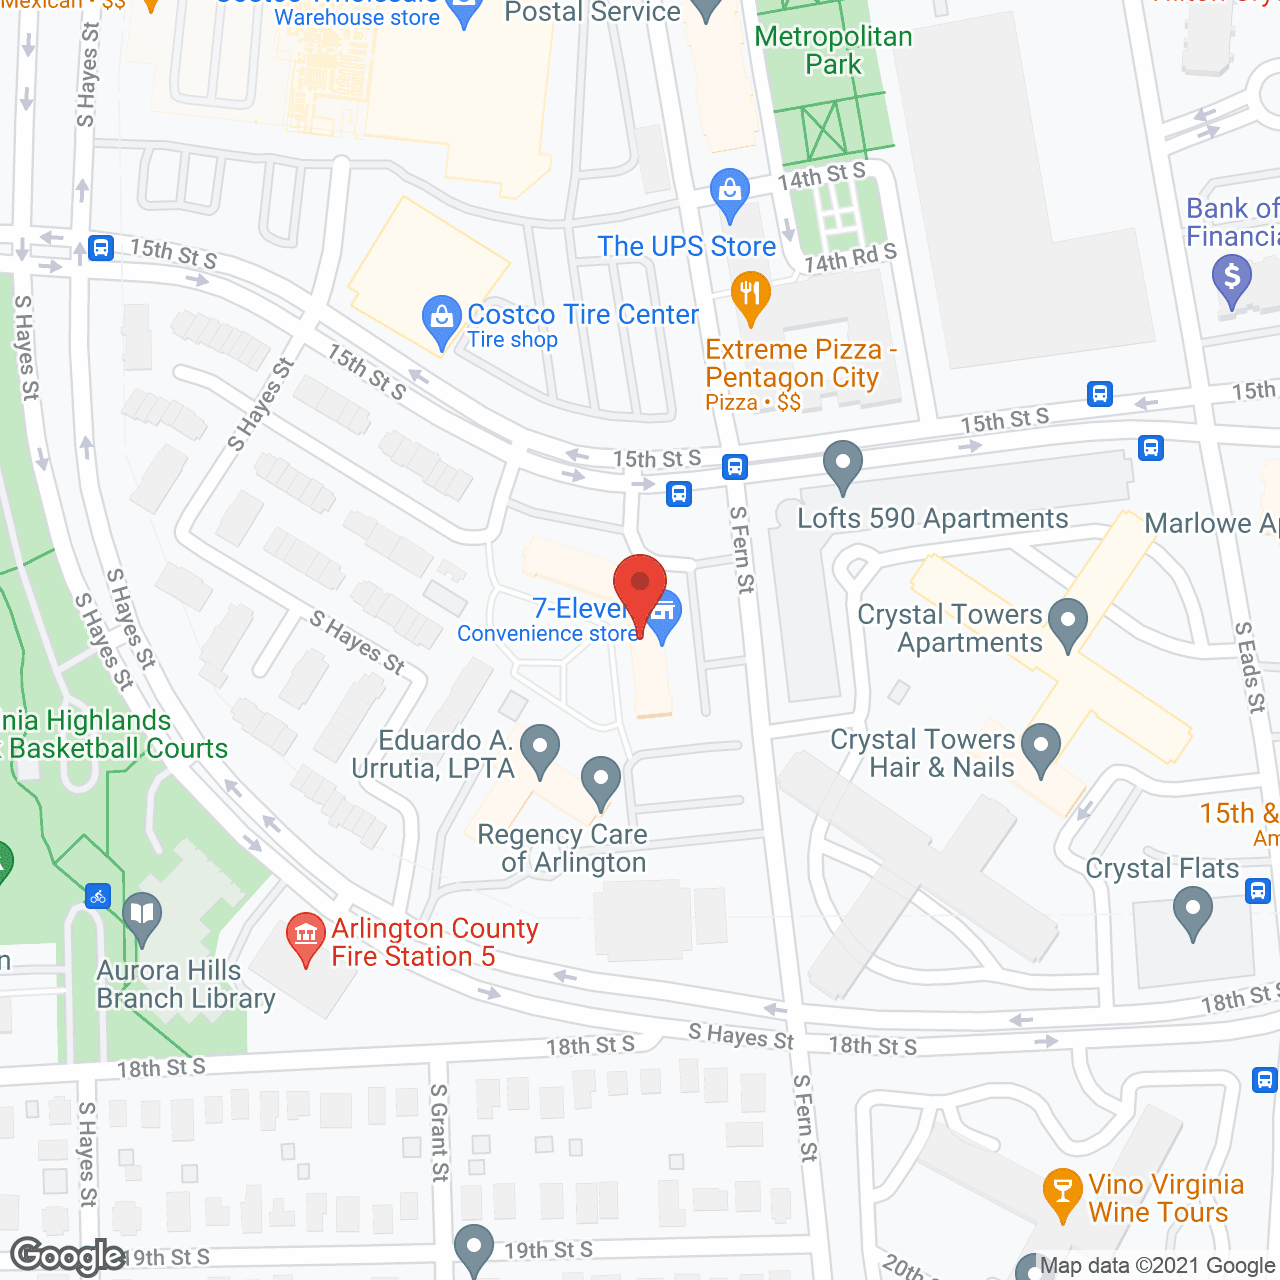 Claridge House of Arlington in google map